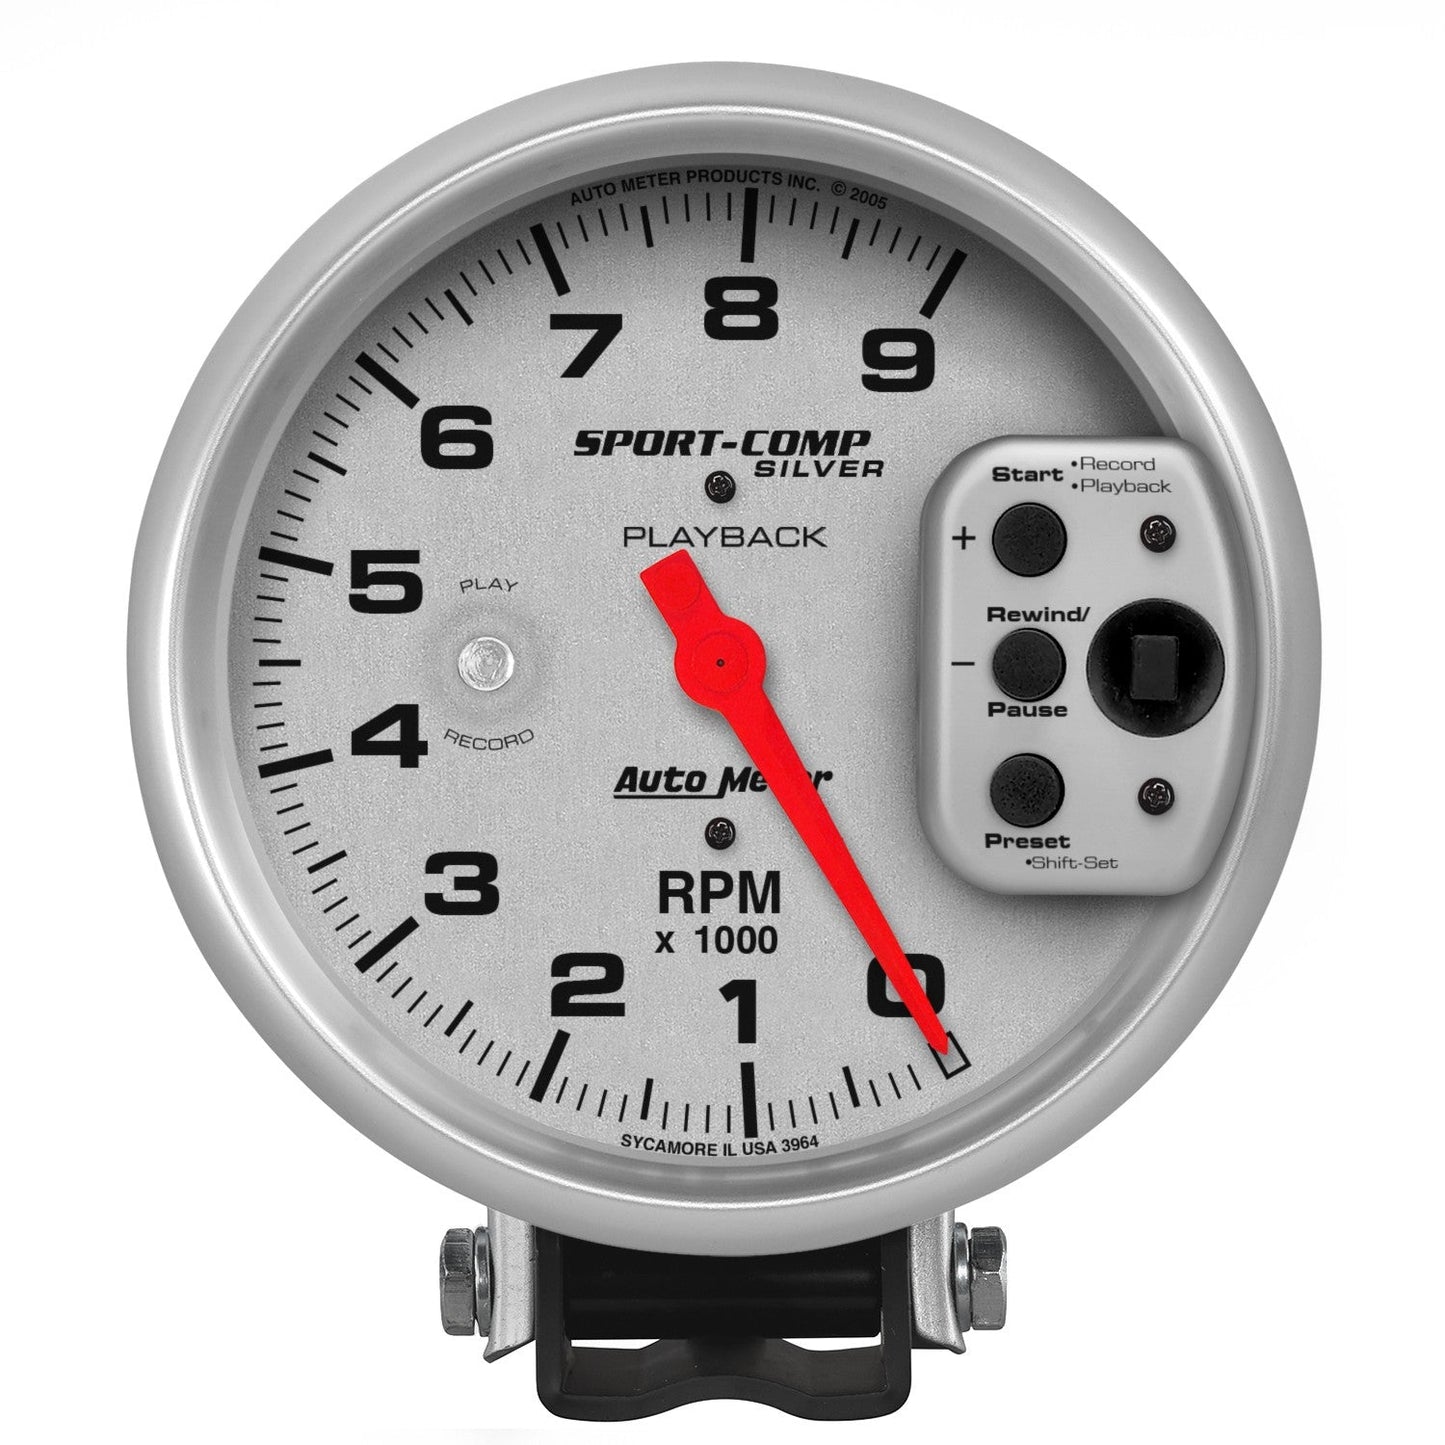 AutoMeter - 5" PEDESTAL PLAYBACK TACHOMETER, 0-9,000 RPM, ULTRA-LITE (3964)